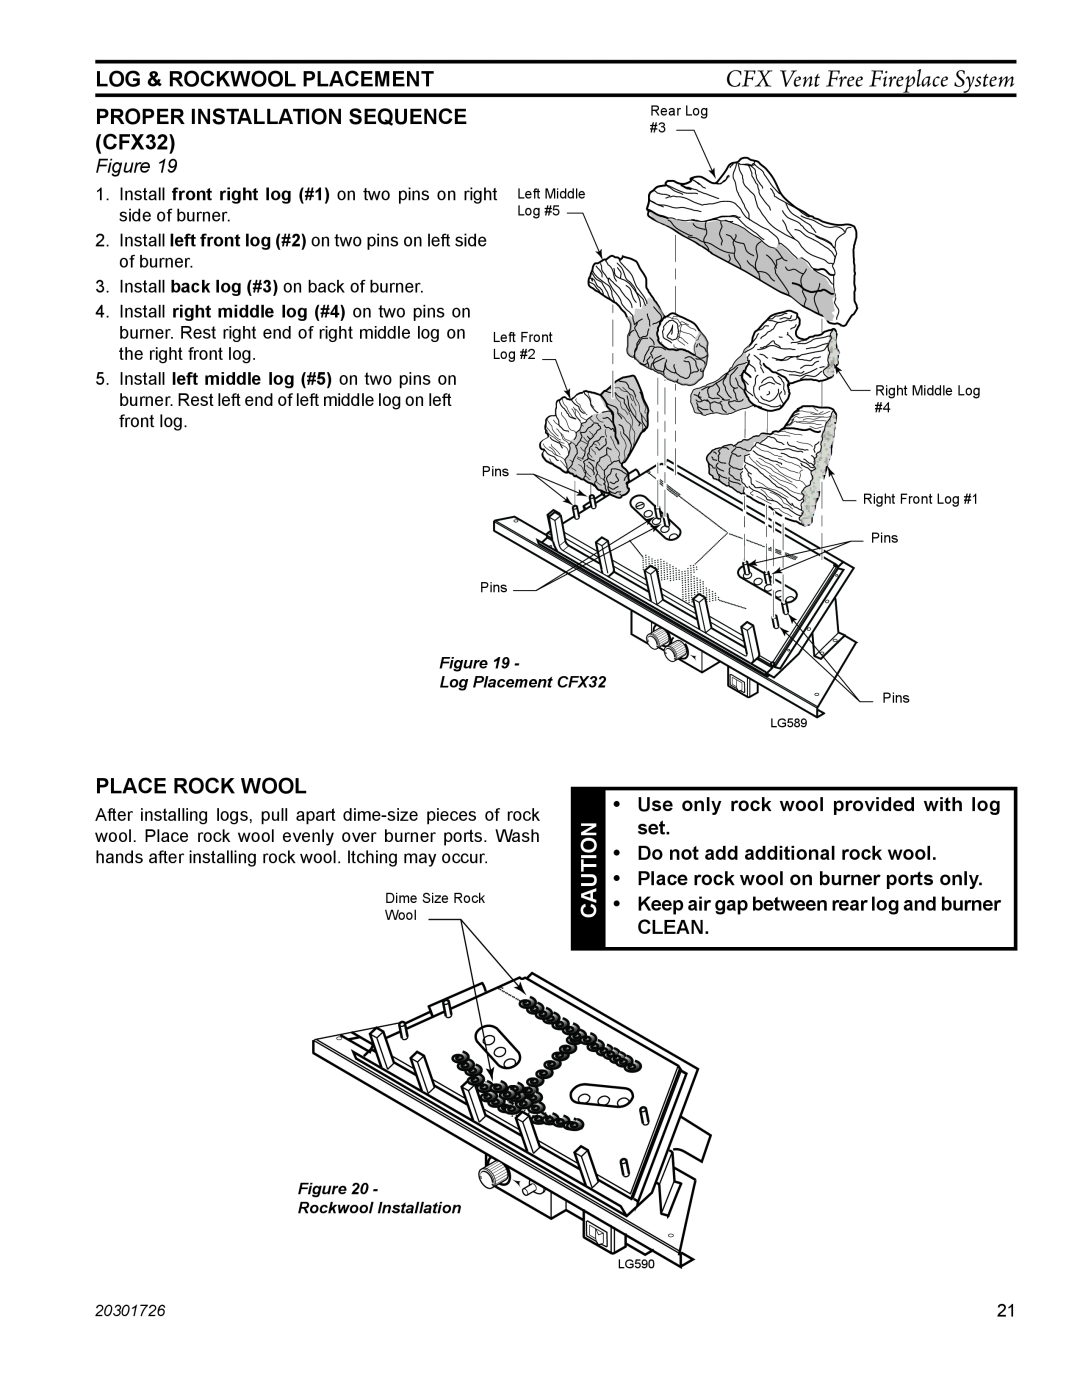 Monessen Hearth CFX32, CFX24 manual Log & Rockwool Placement, Proper installation sequence, Place rock wool 